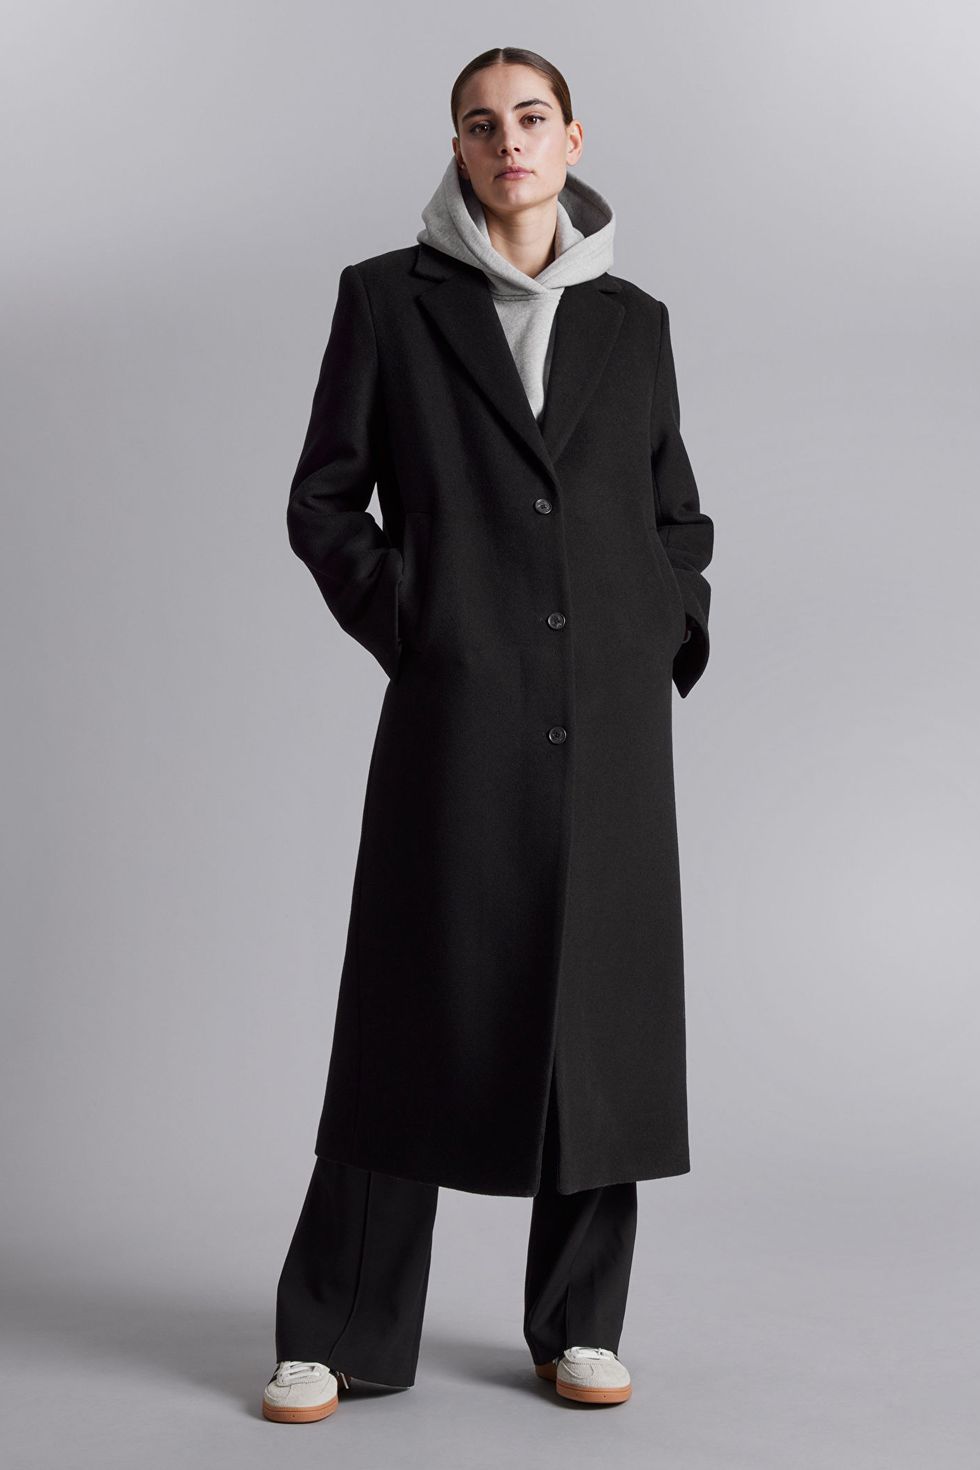 Long Wool Coat, Wool Coat, Asymmetrical Wool Coat, Winter Coat